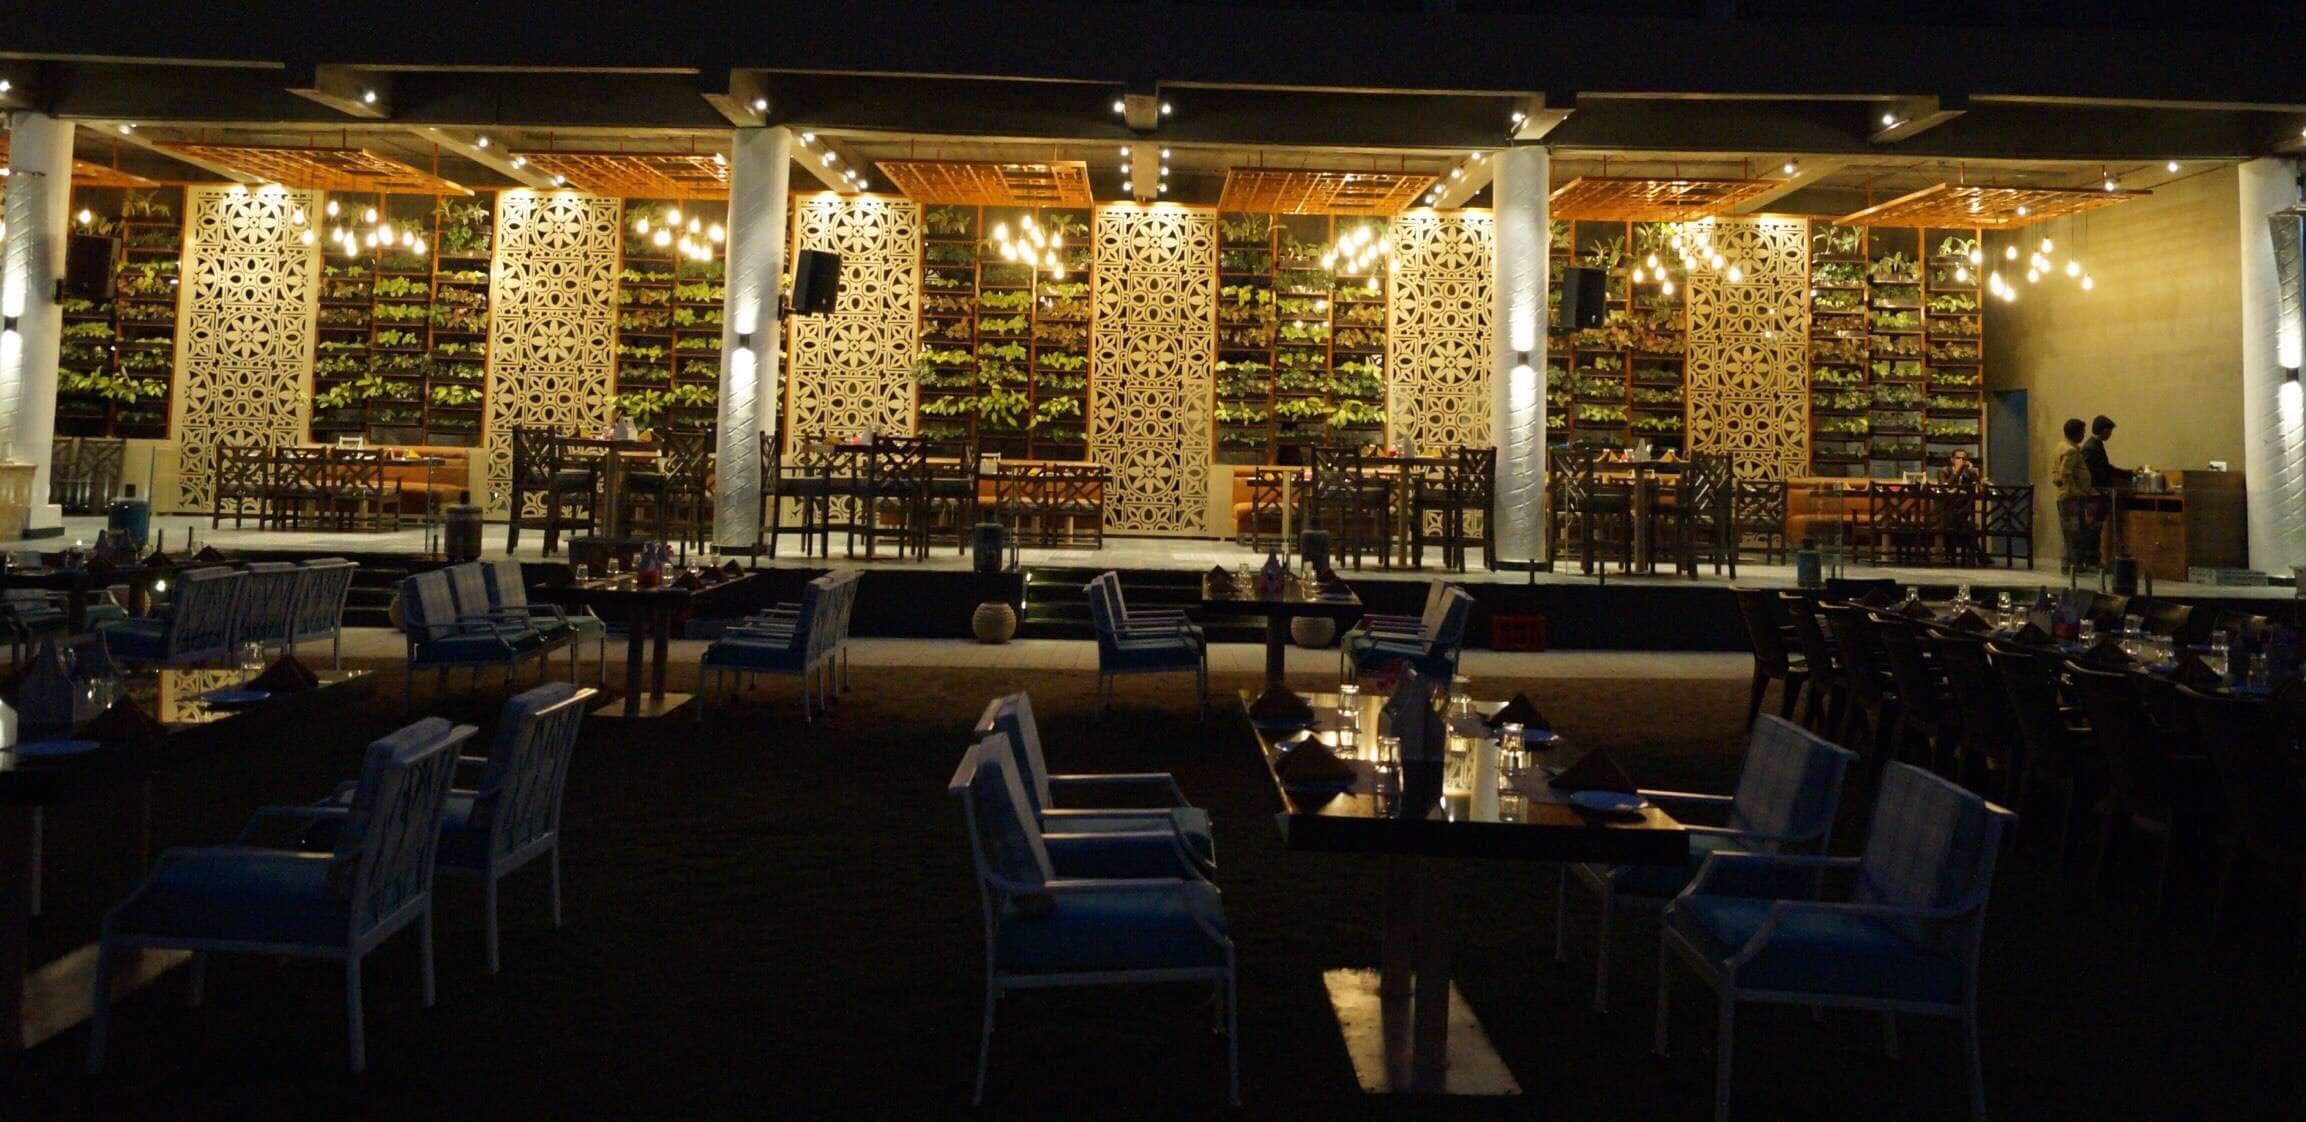 Kasbaa Hill Restaurant, Amravati Road, Nagpur | Zomato